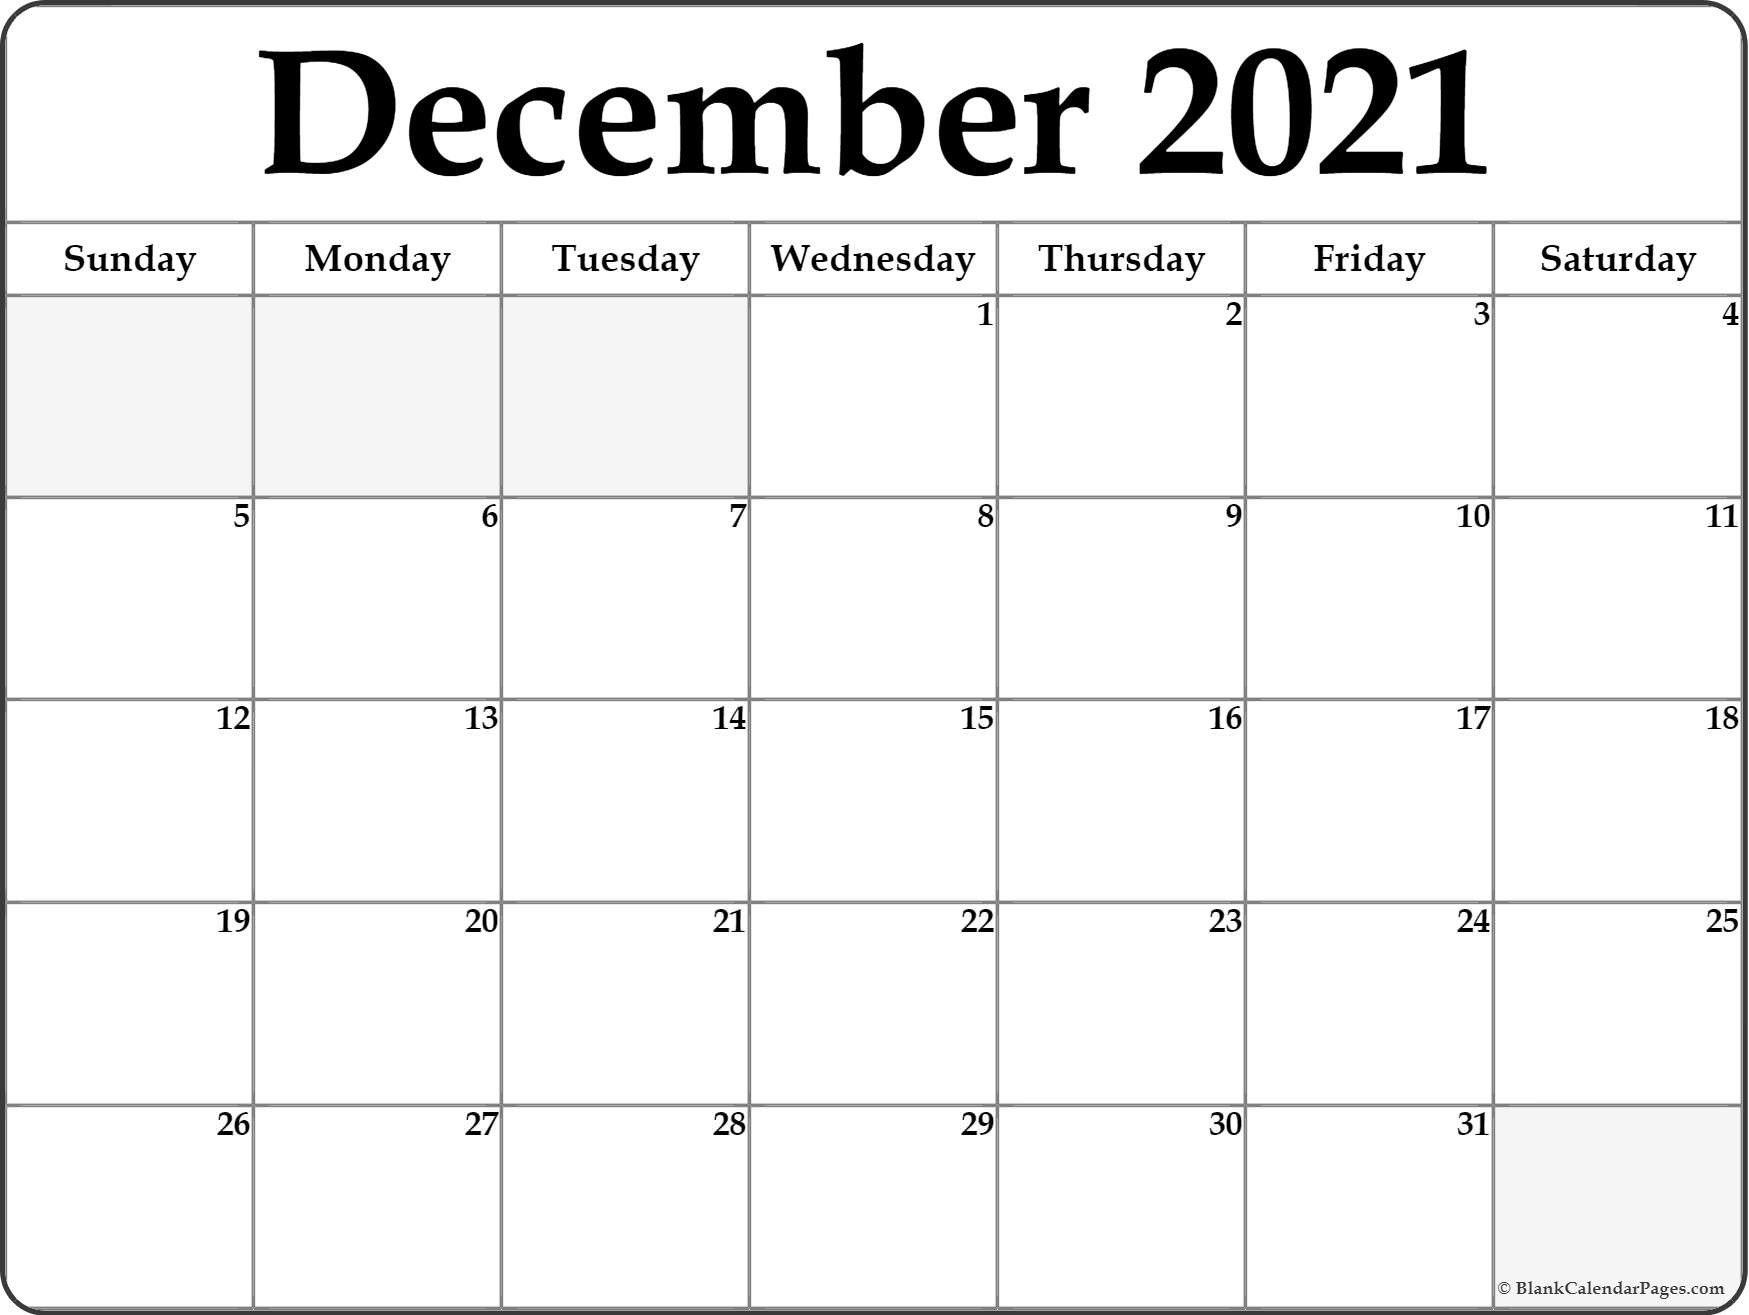 January 2021 Calendar - Free Download Printable Calendar Blank Calendar December 2020 January 2021